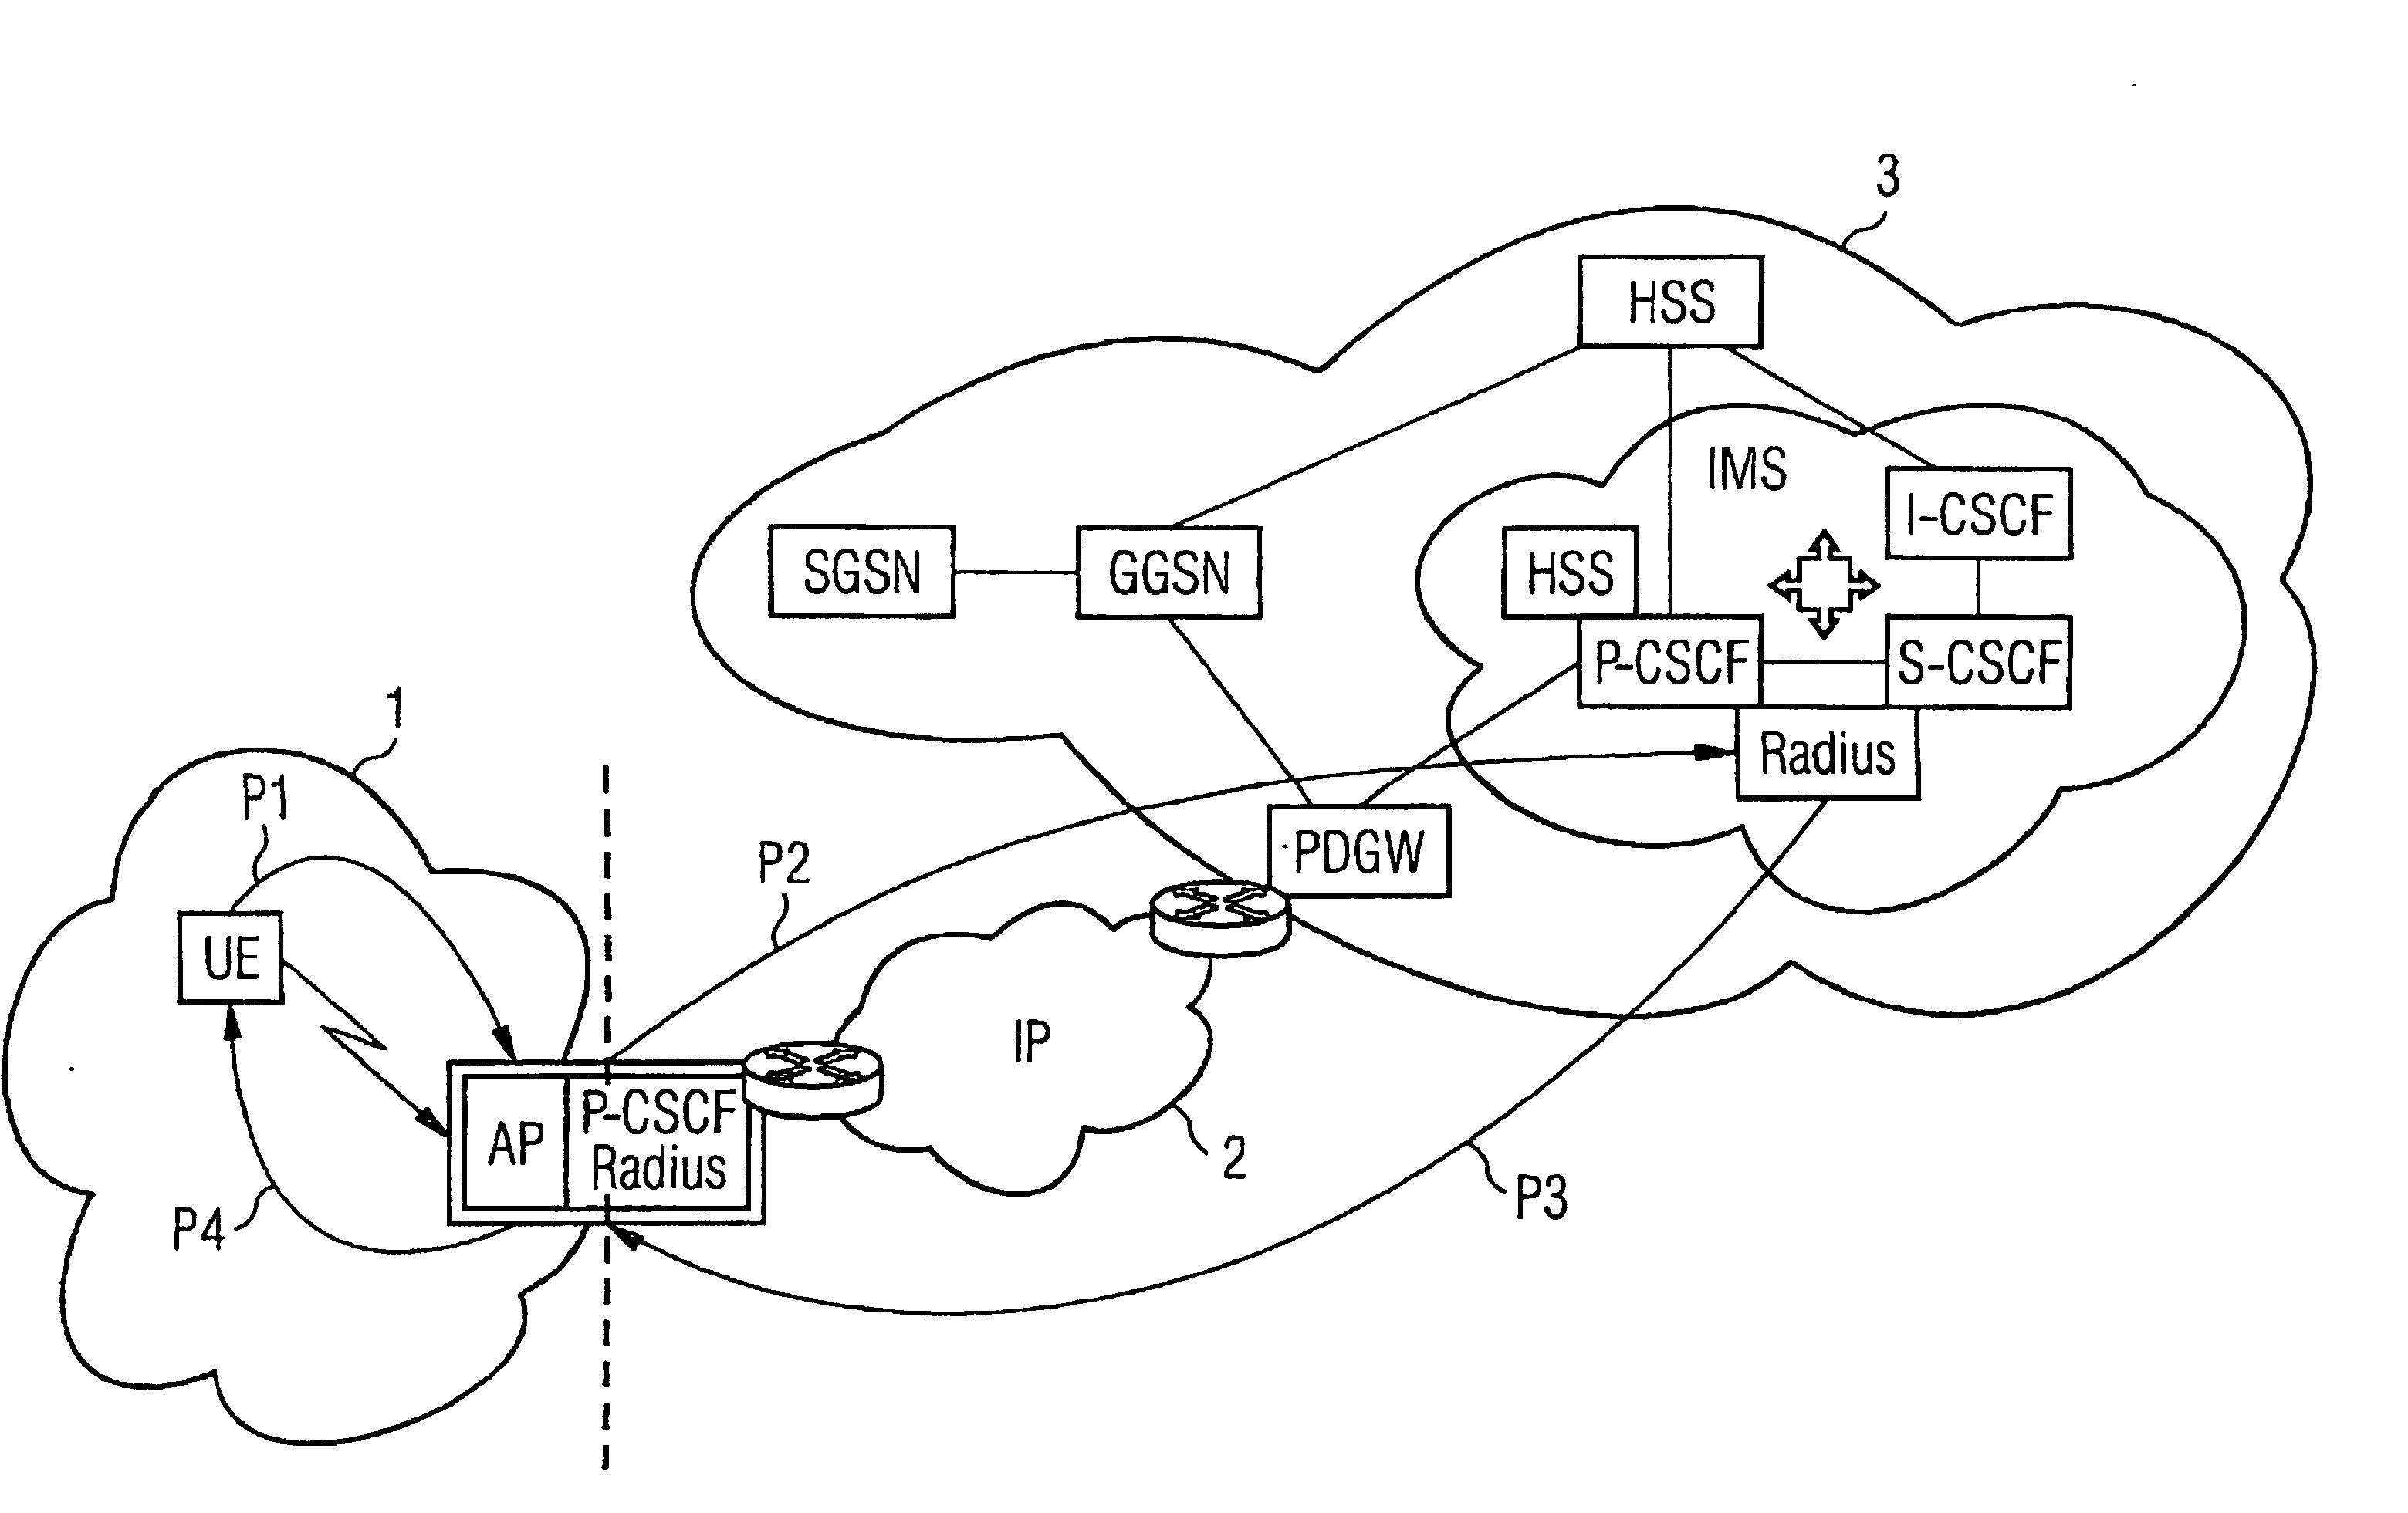 Method for transmitting data in a wlan network